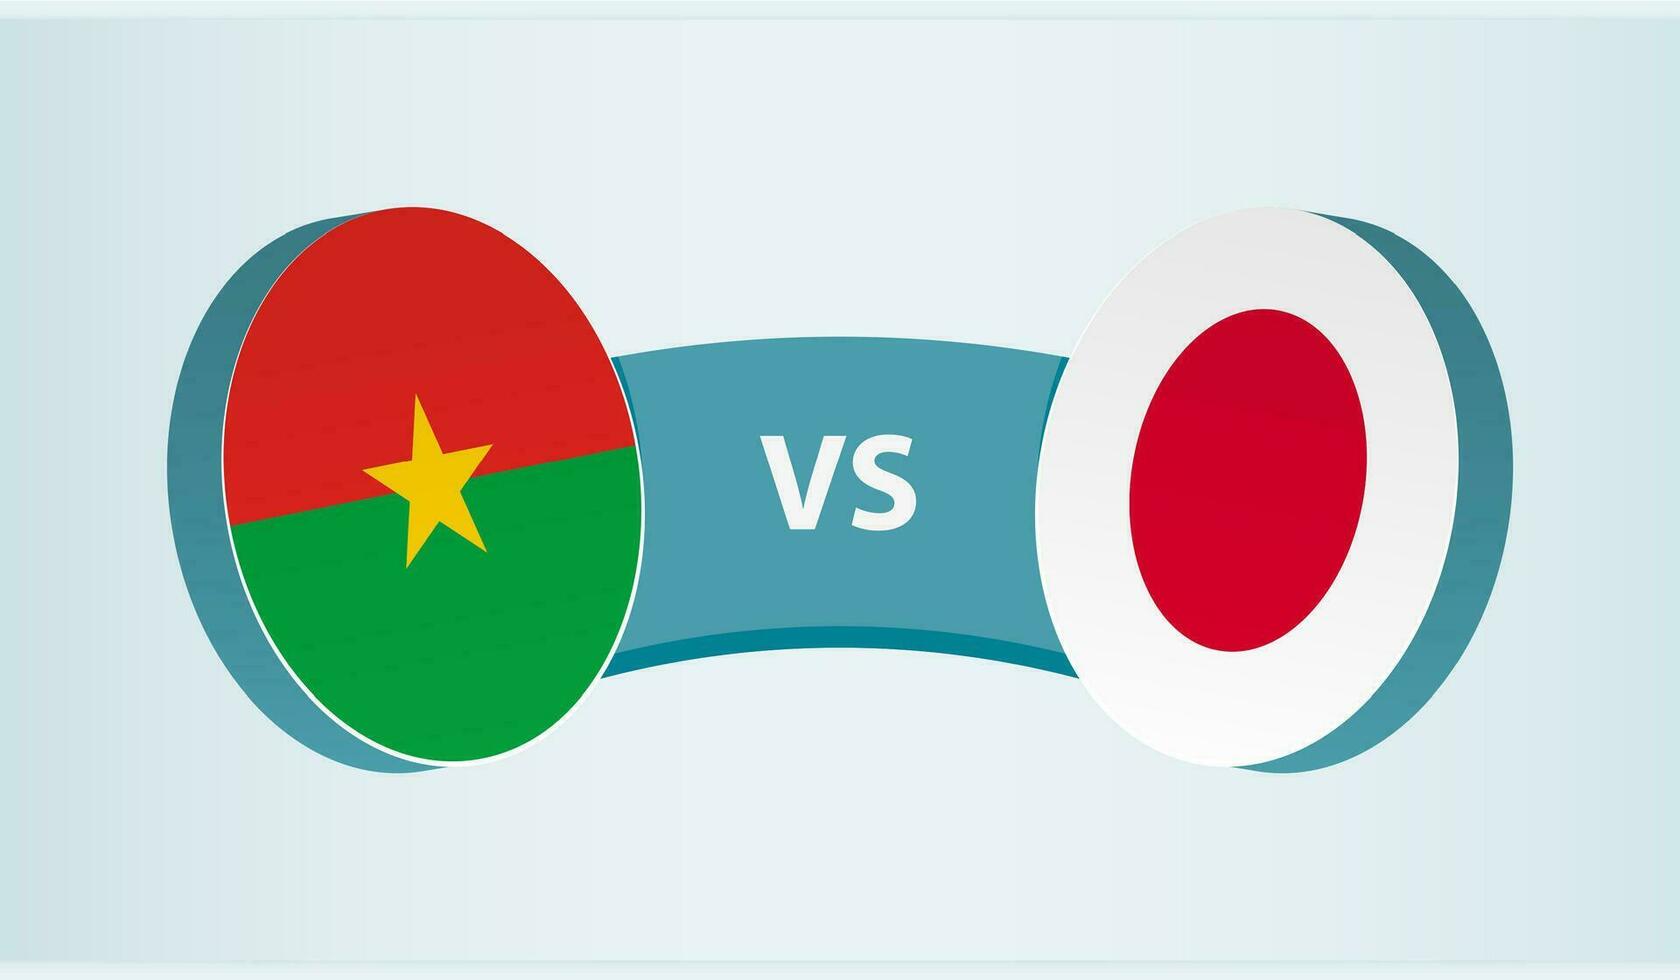 Burkina faso mot Japan, team sporter konkurrens begrepp. vektor